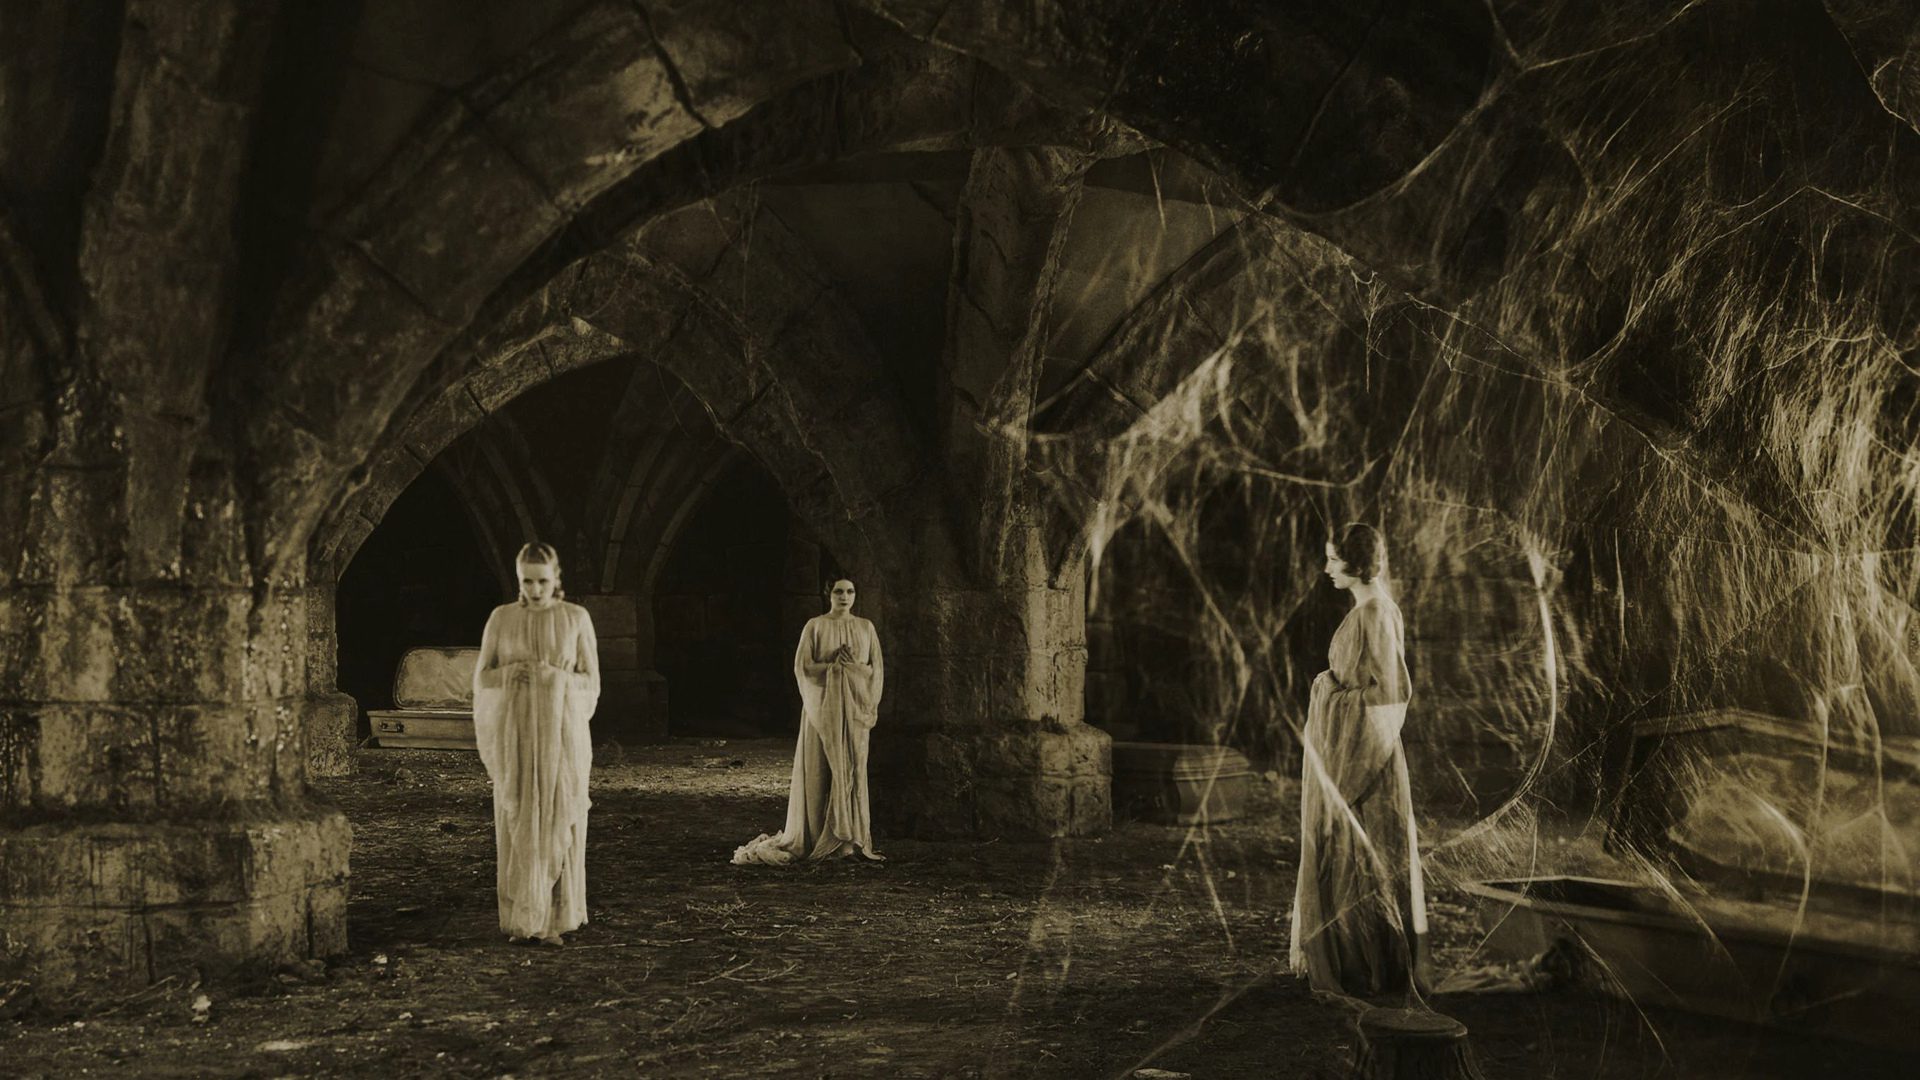 Recensione Dracula, Diretto di Tod Browning con Bela Lugosi